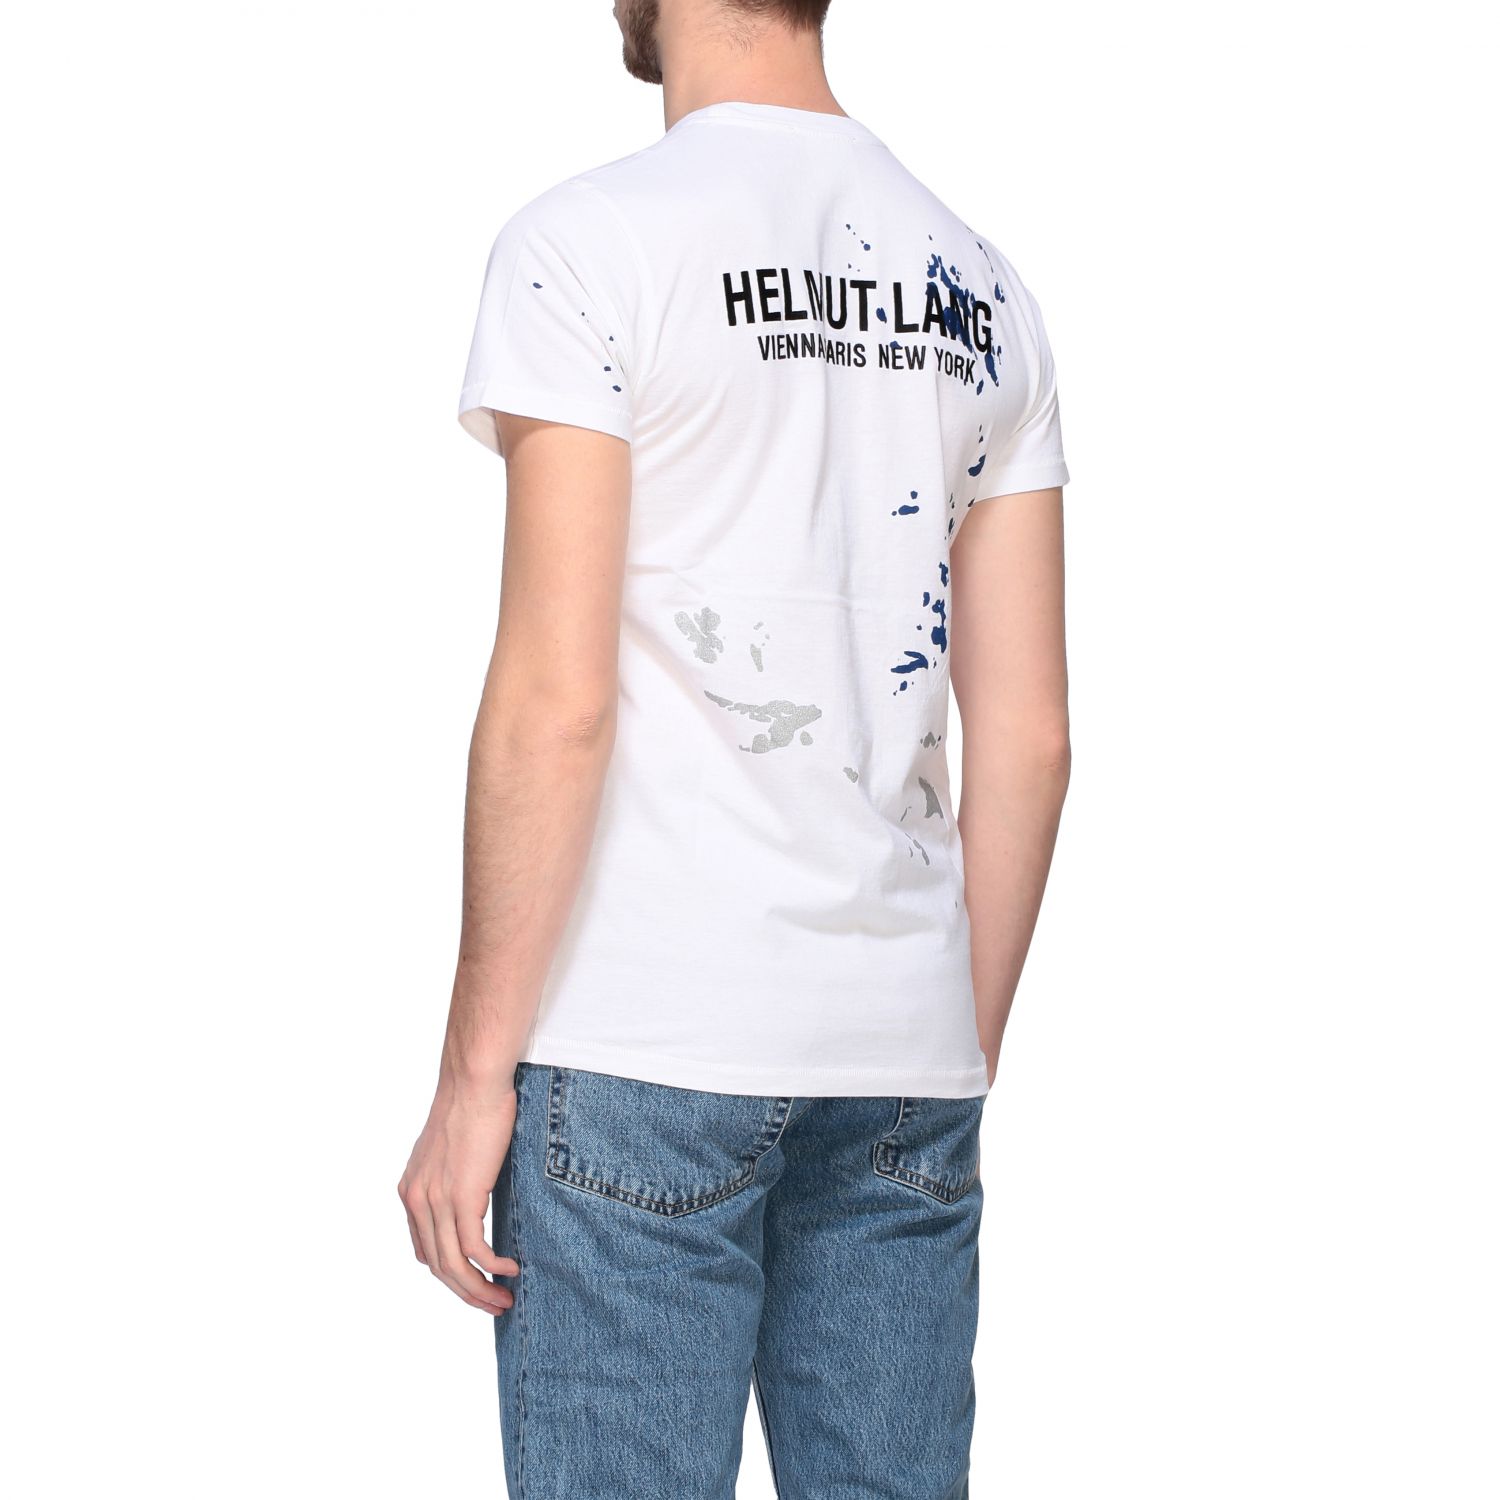 Helmut Lang Outlet: T-shirt men | T-Shirt Helmut Lang Men White | T